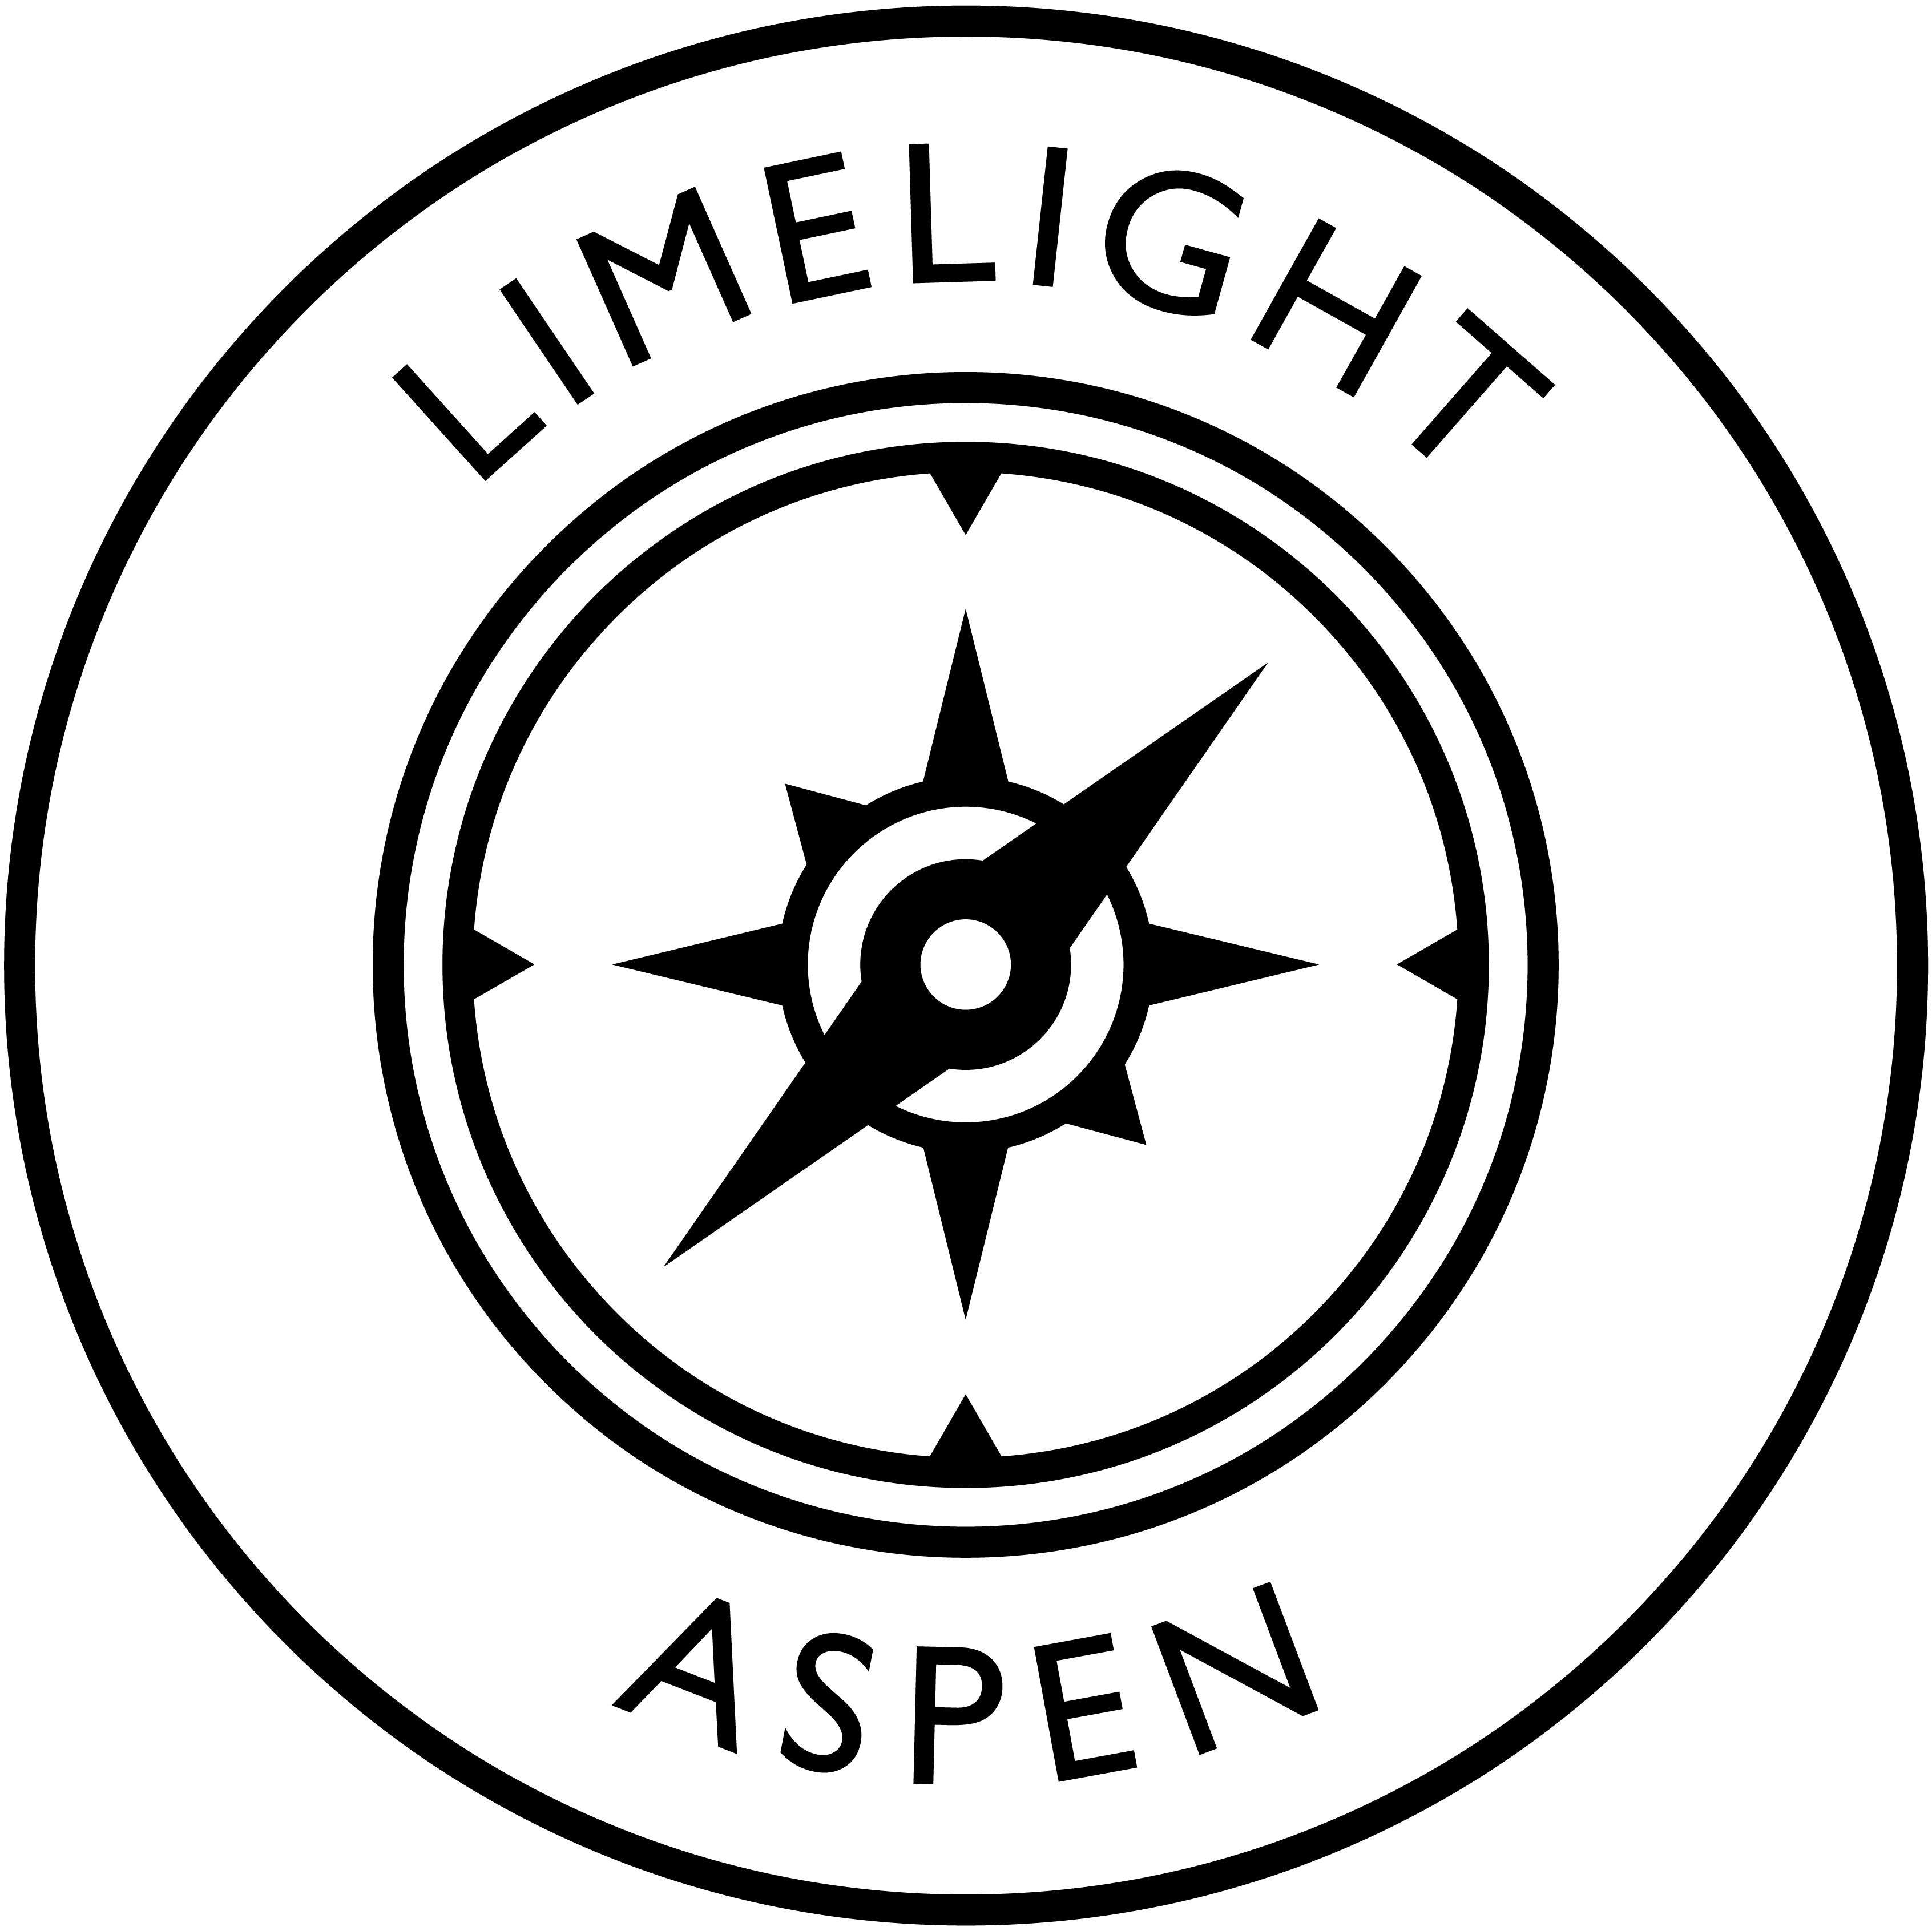 Limelight Aspen Compass Logo